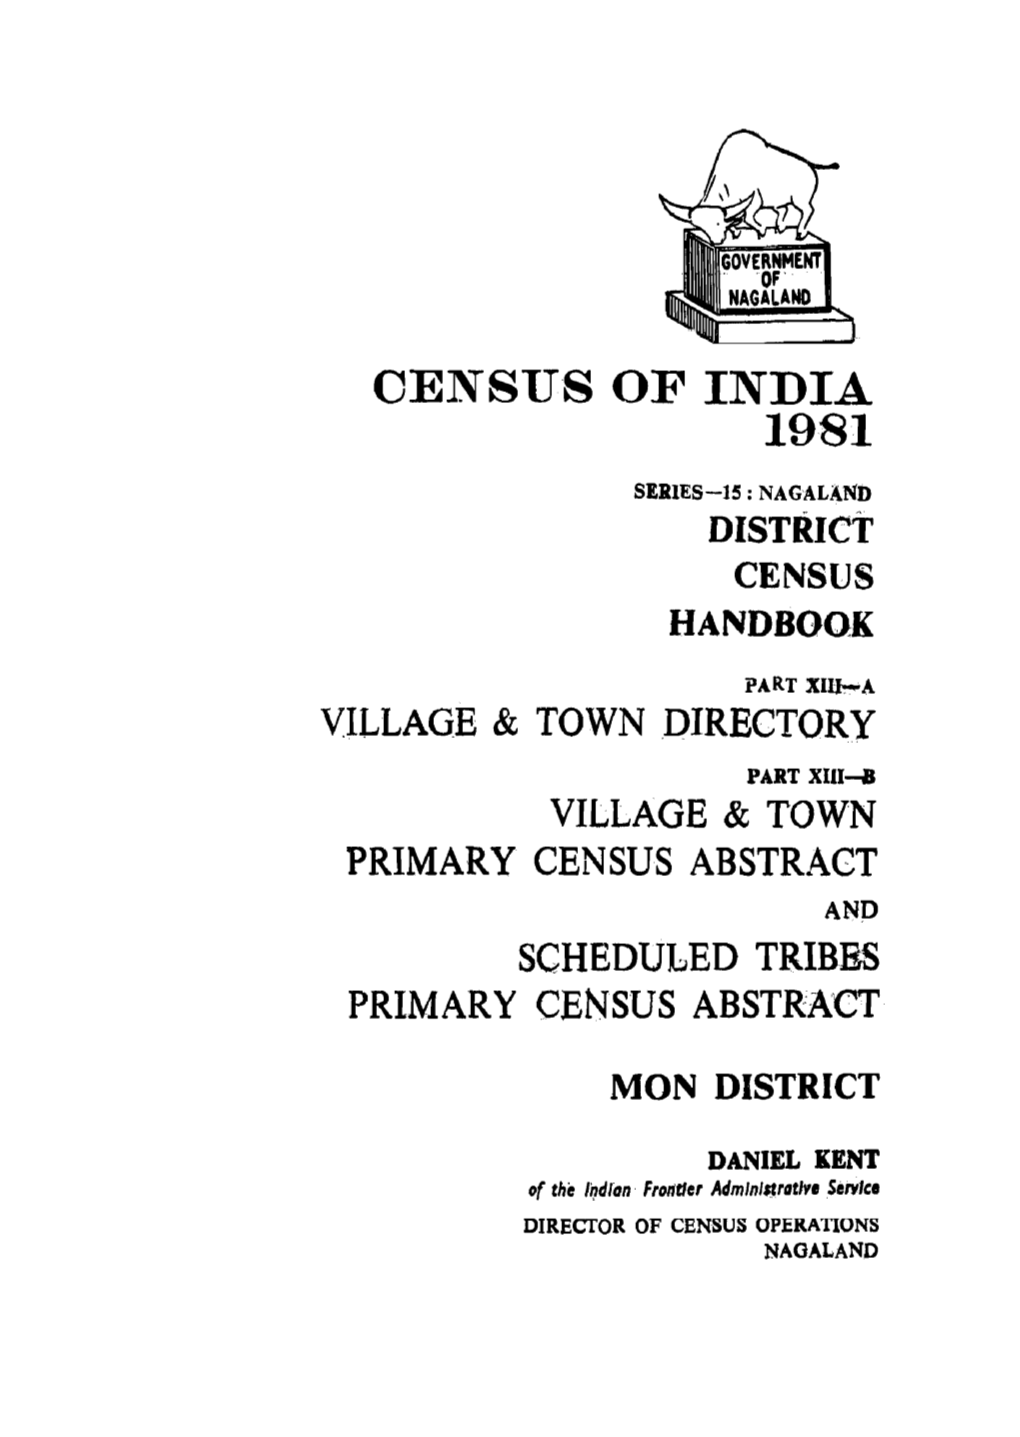 District Census Handbook, Mon, Part XIII-A & B, Series-15, Nagland